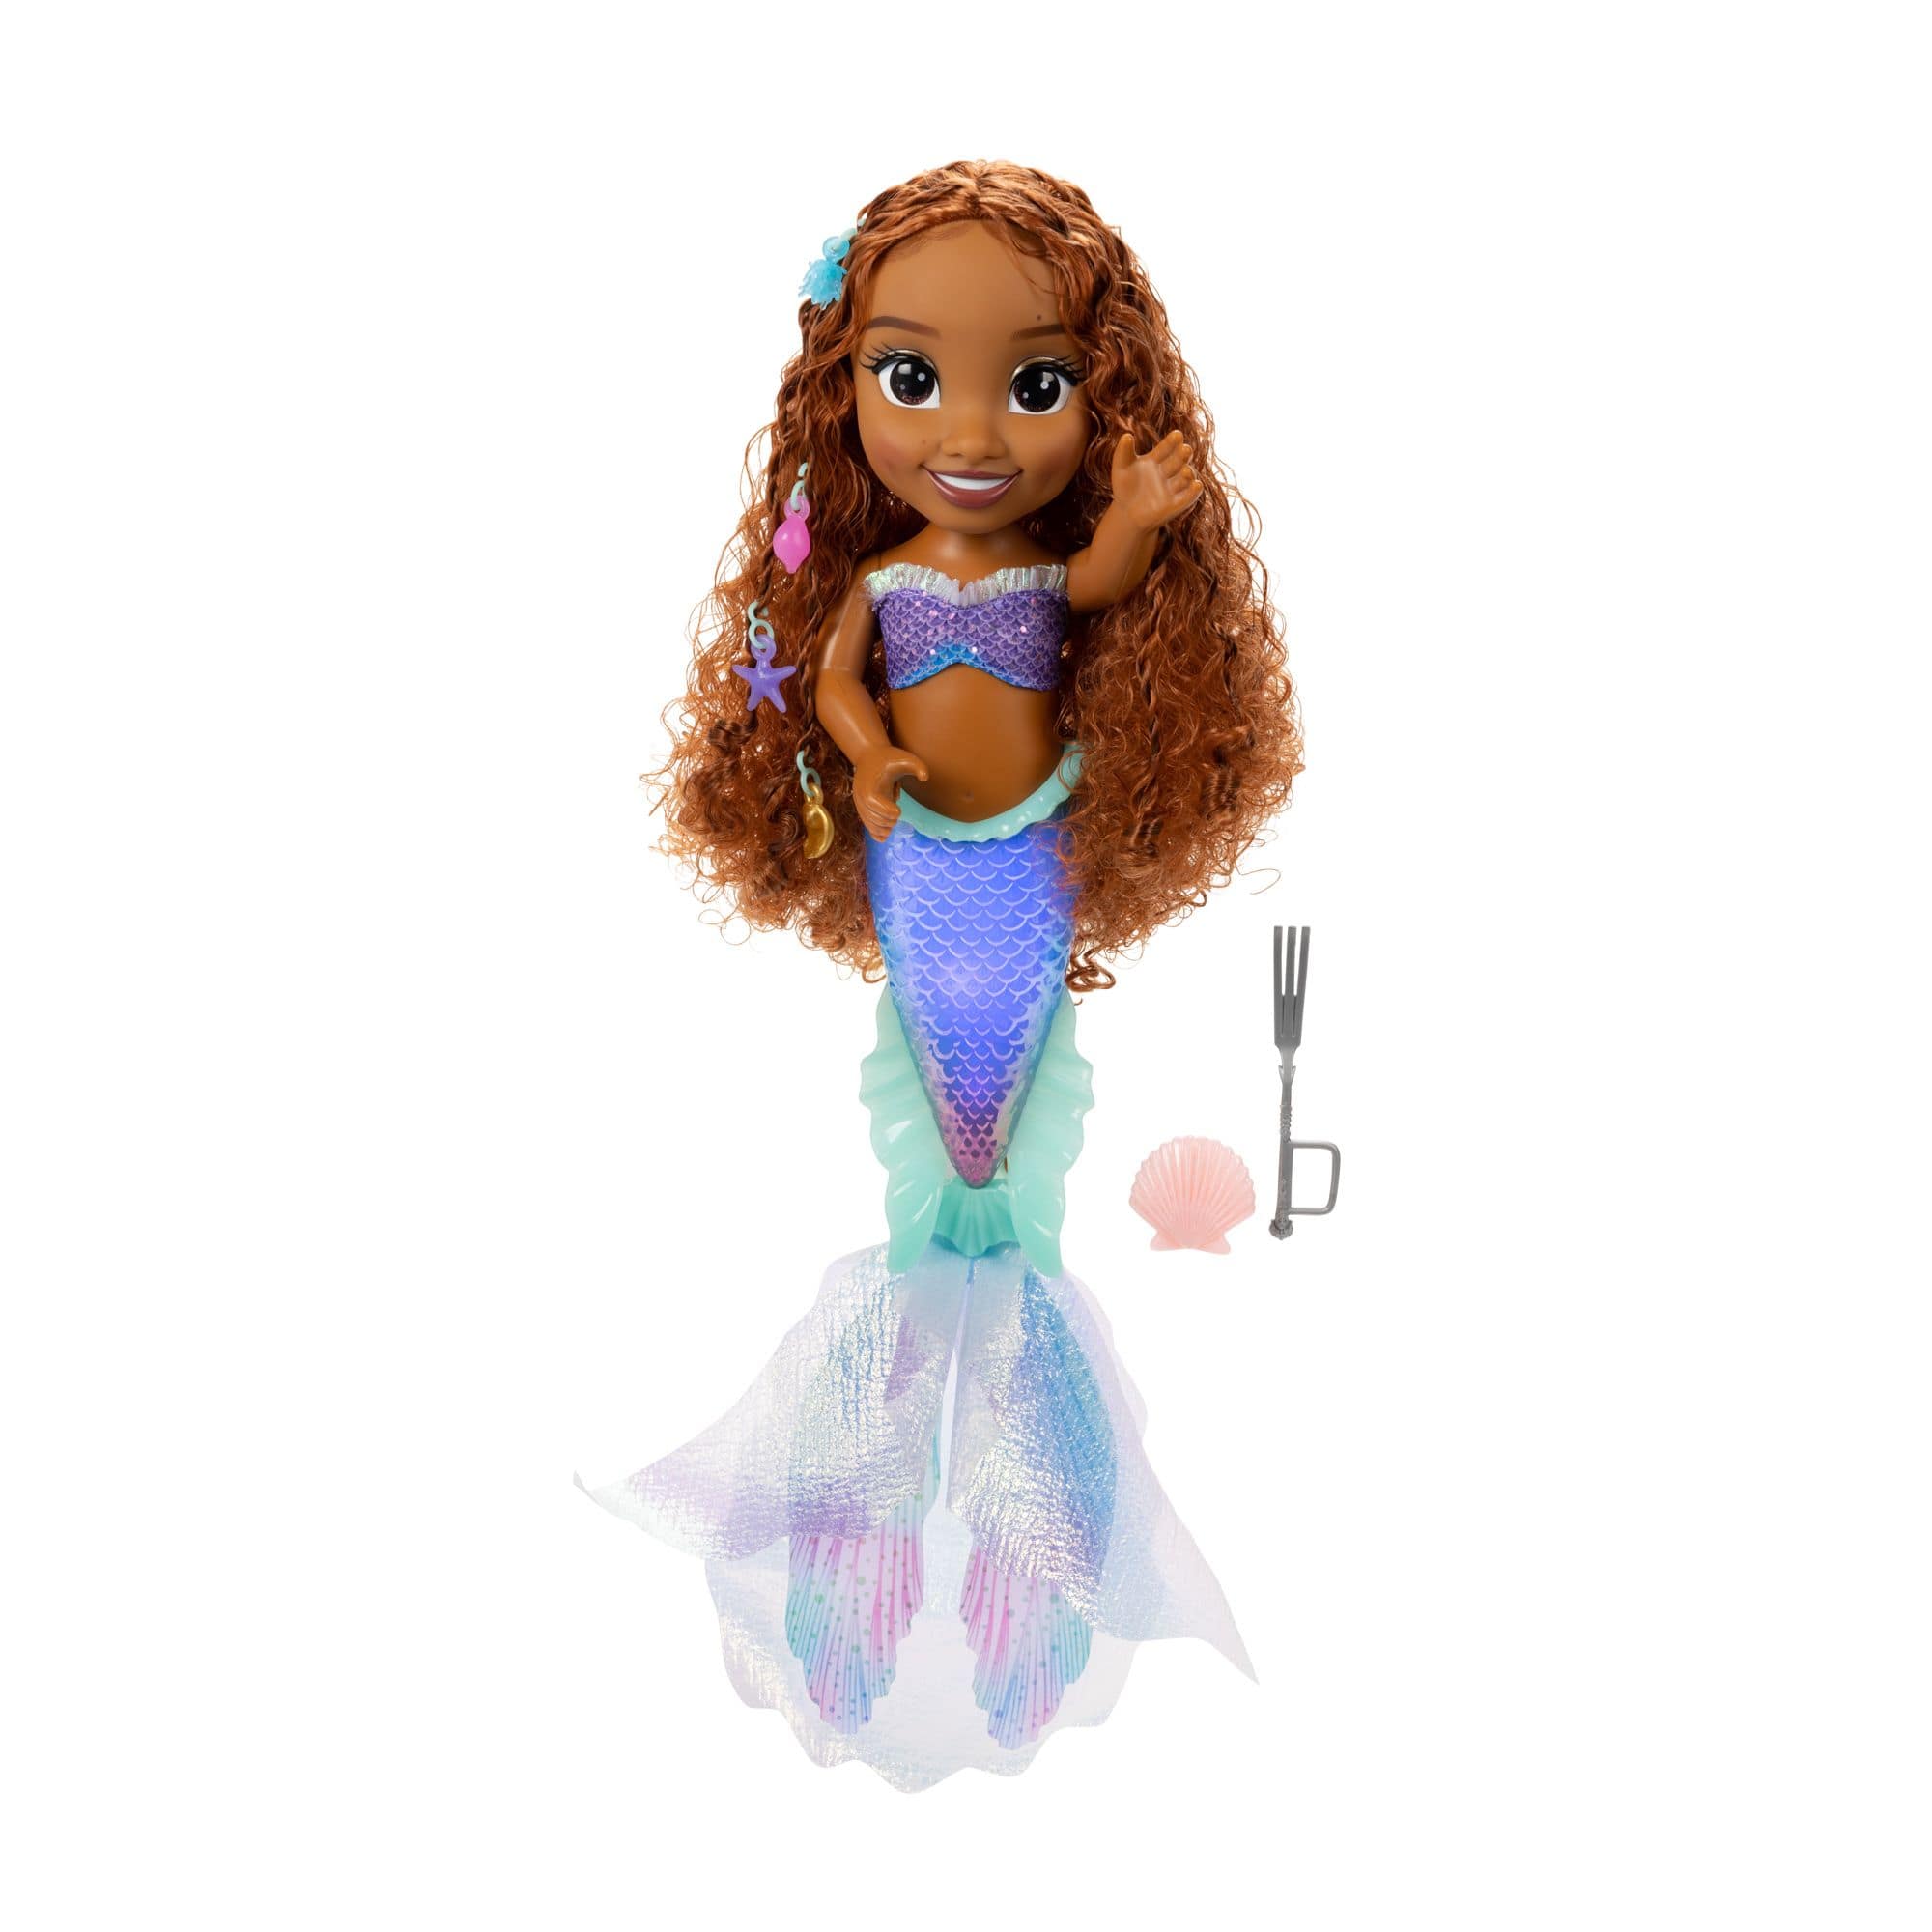 Disney The Little Mermaid Ariel Leggings Junior Women’s Deep Sea NWT New  Size L